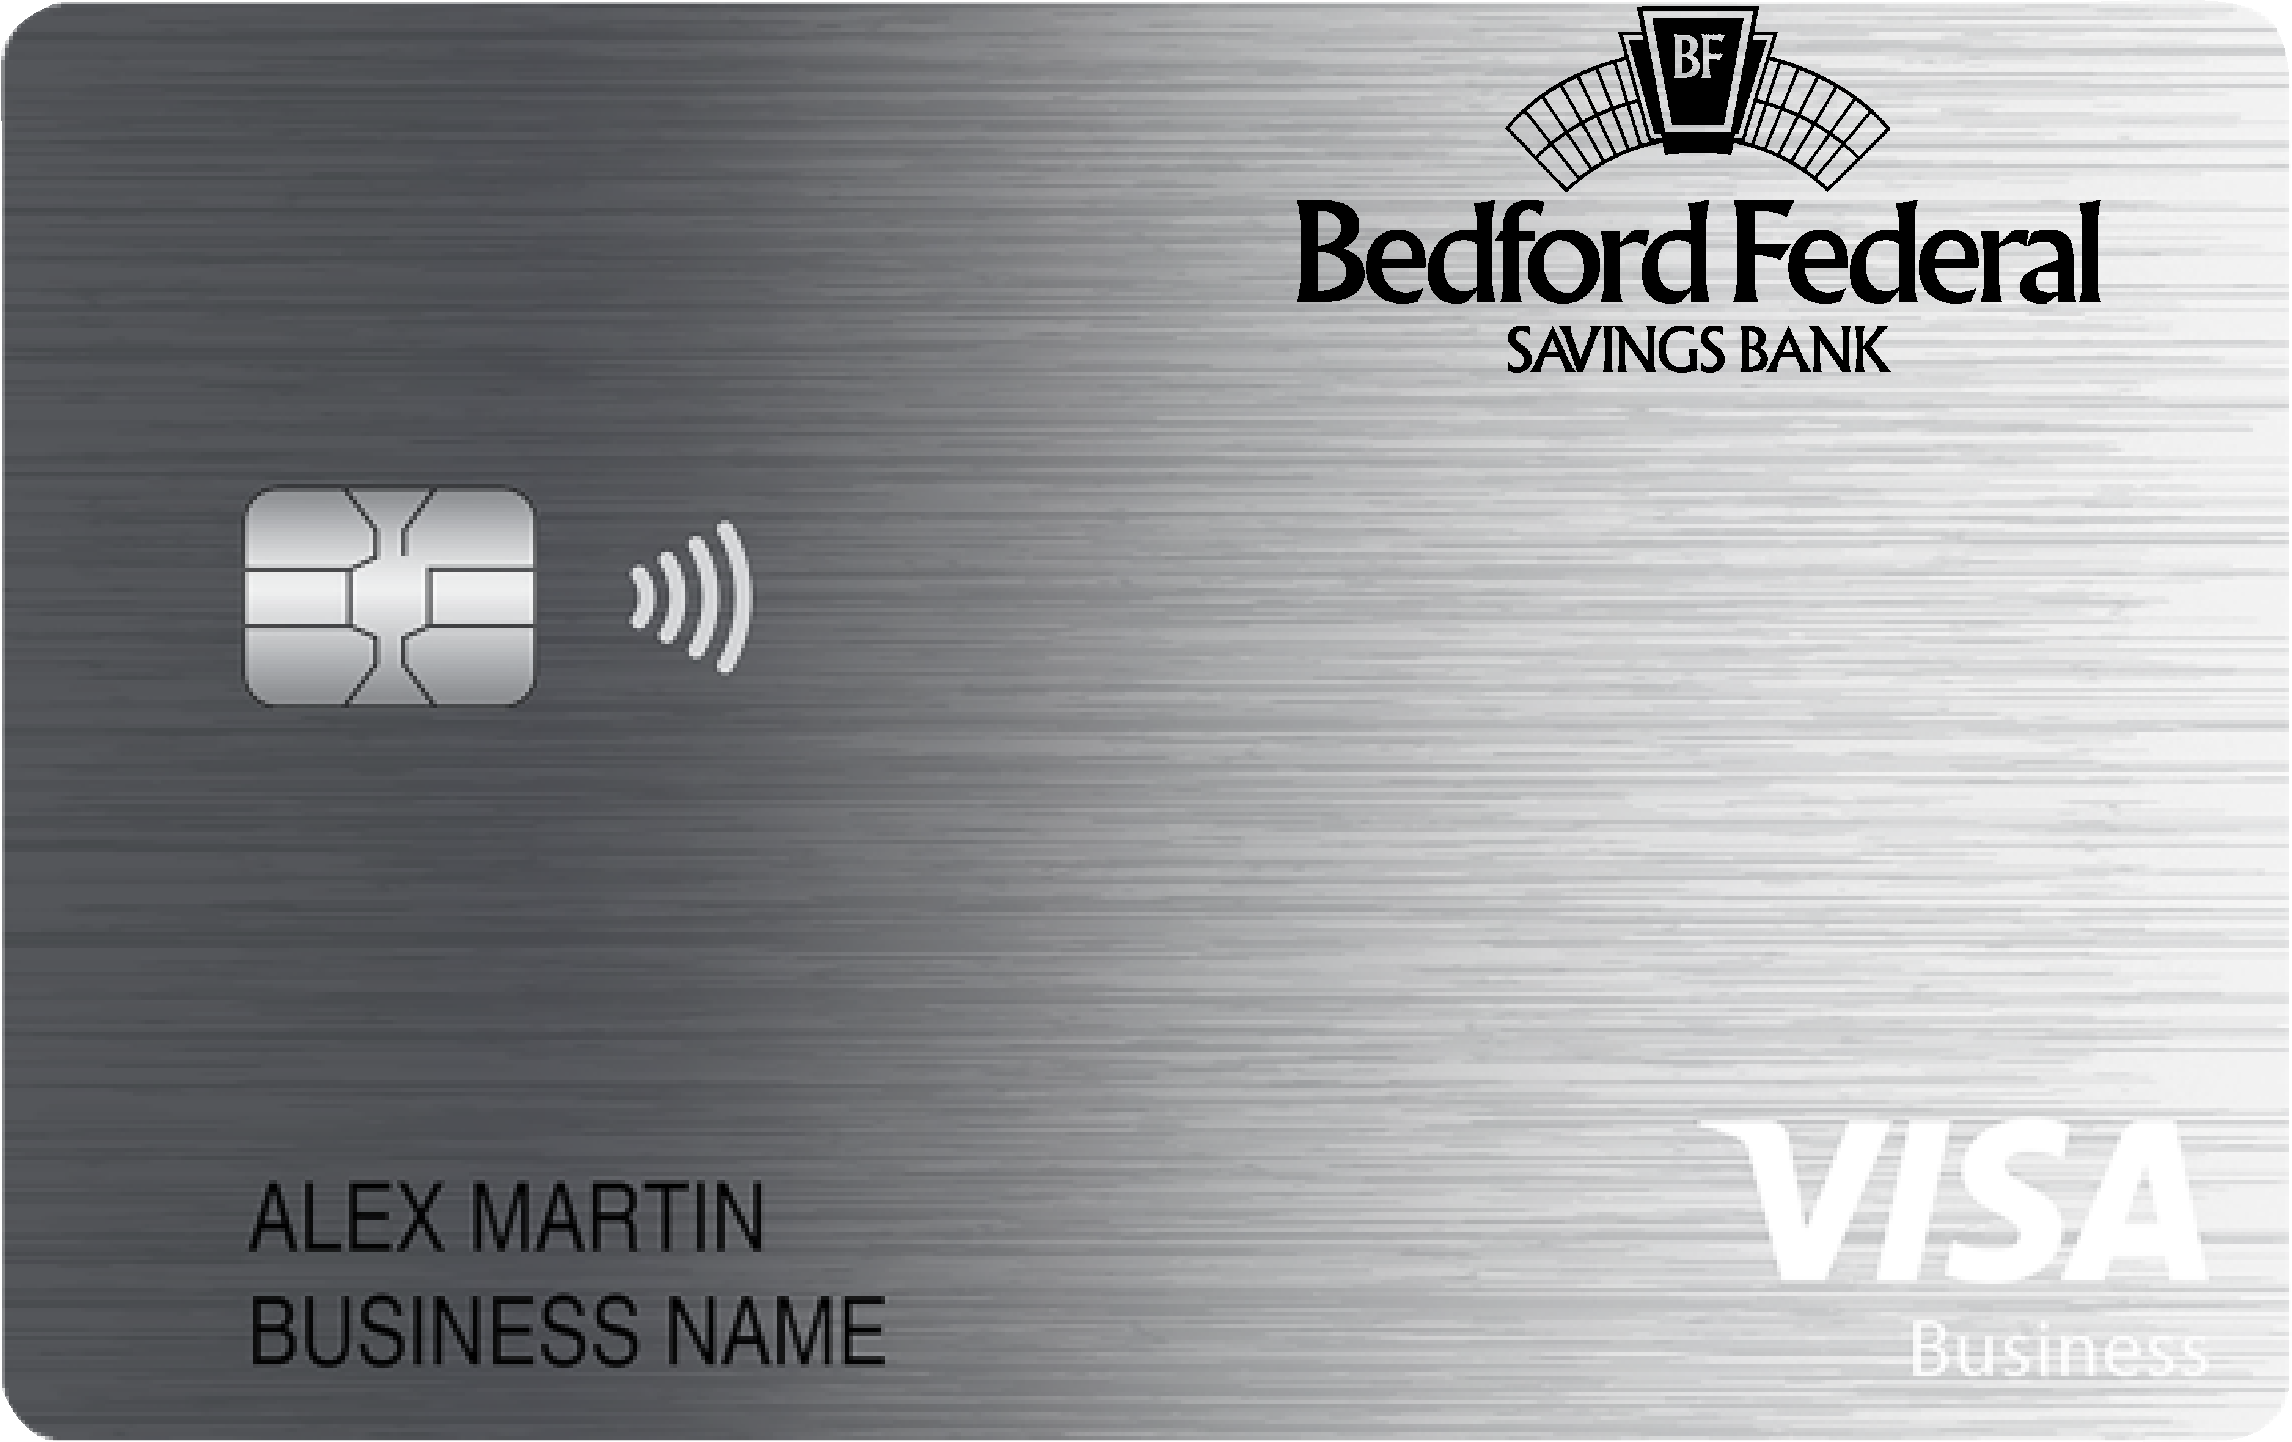 Bedford Federal Savings Bank Business Card Card